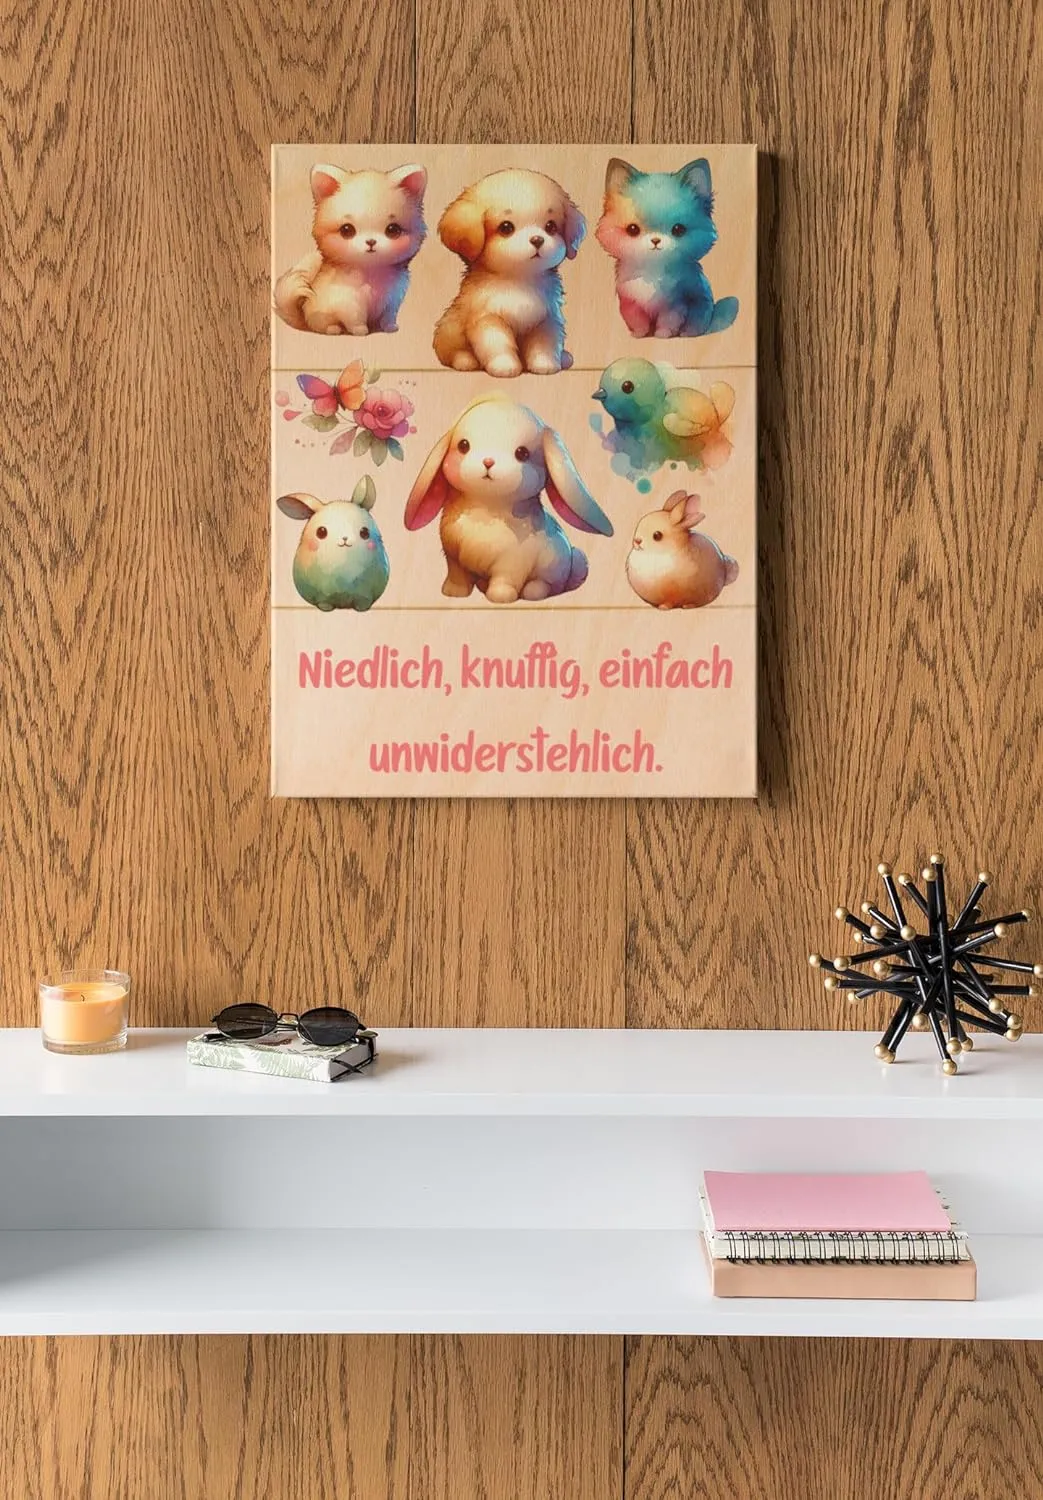 Personalisierte Birkenholz-Fototafel - Romantische Wasserfarben Tiere